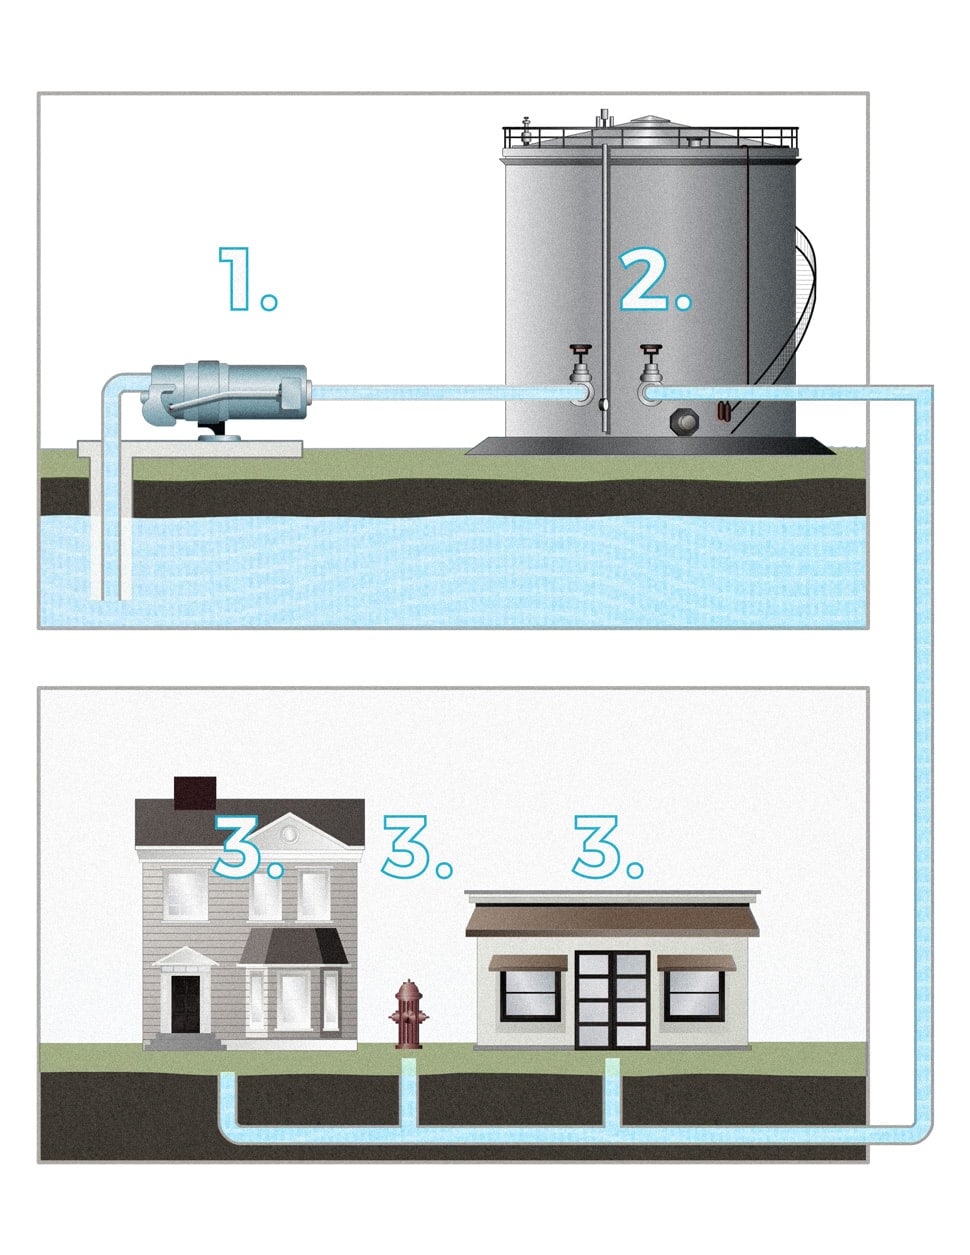 New Hampshire Public Water Purification Diagram